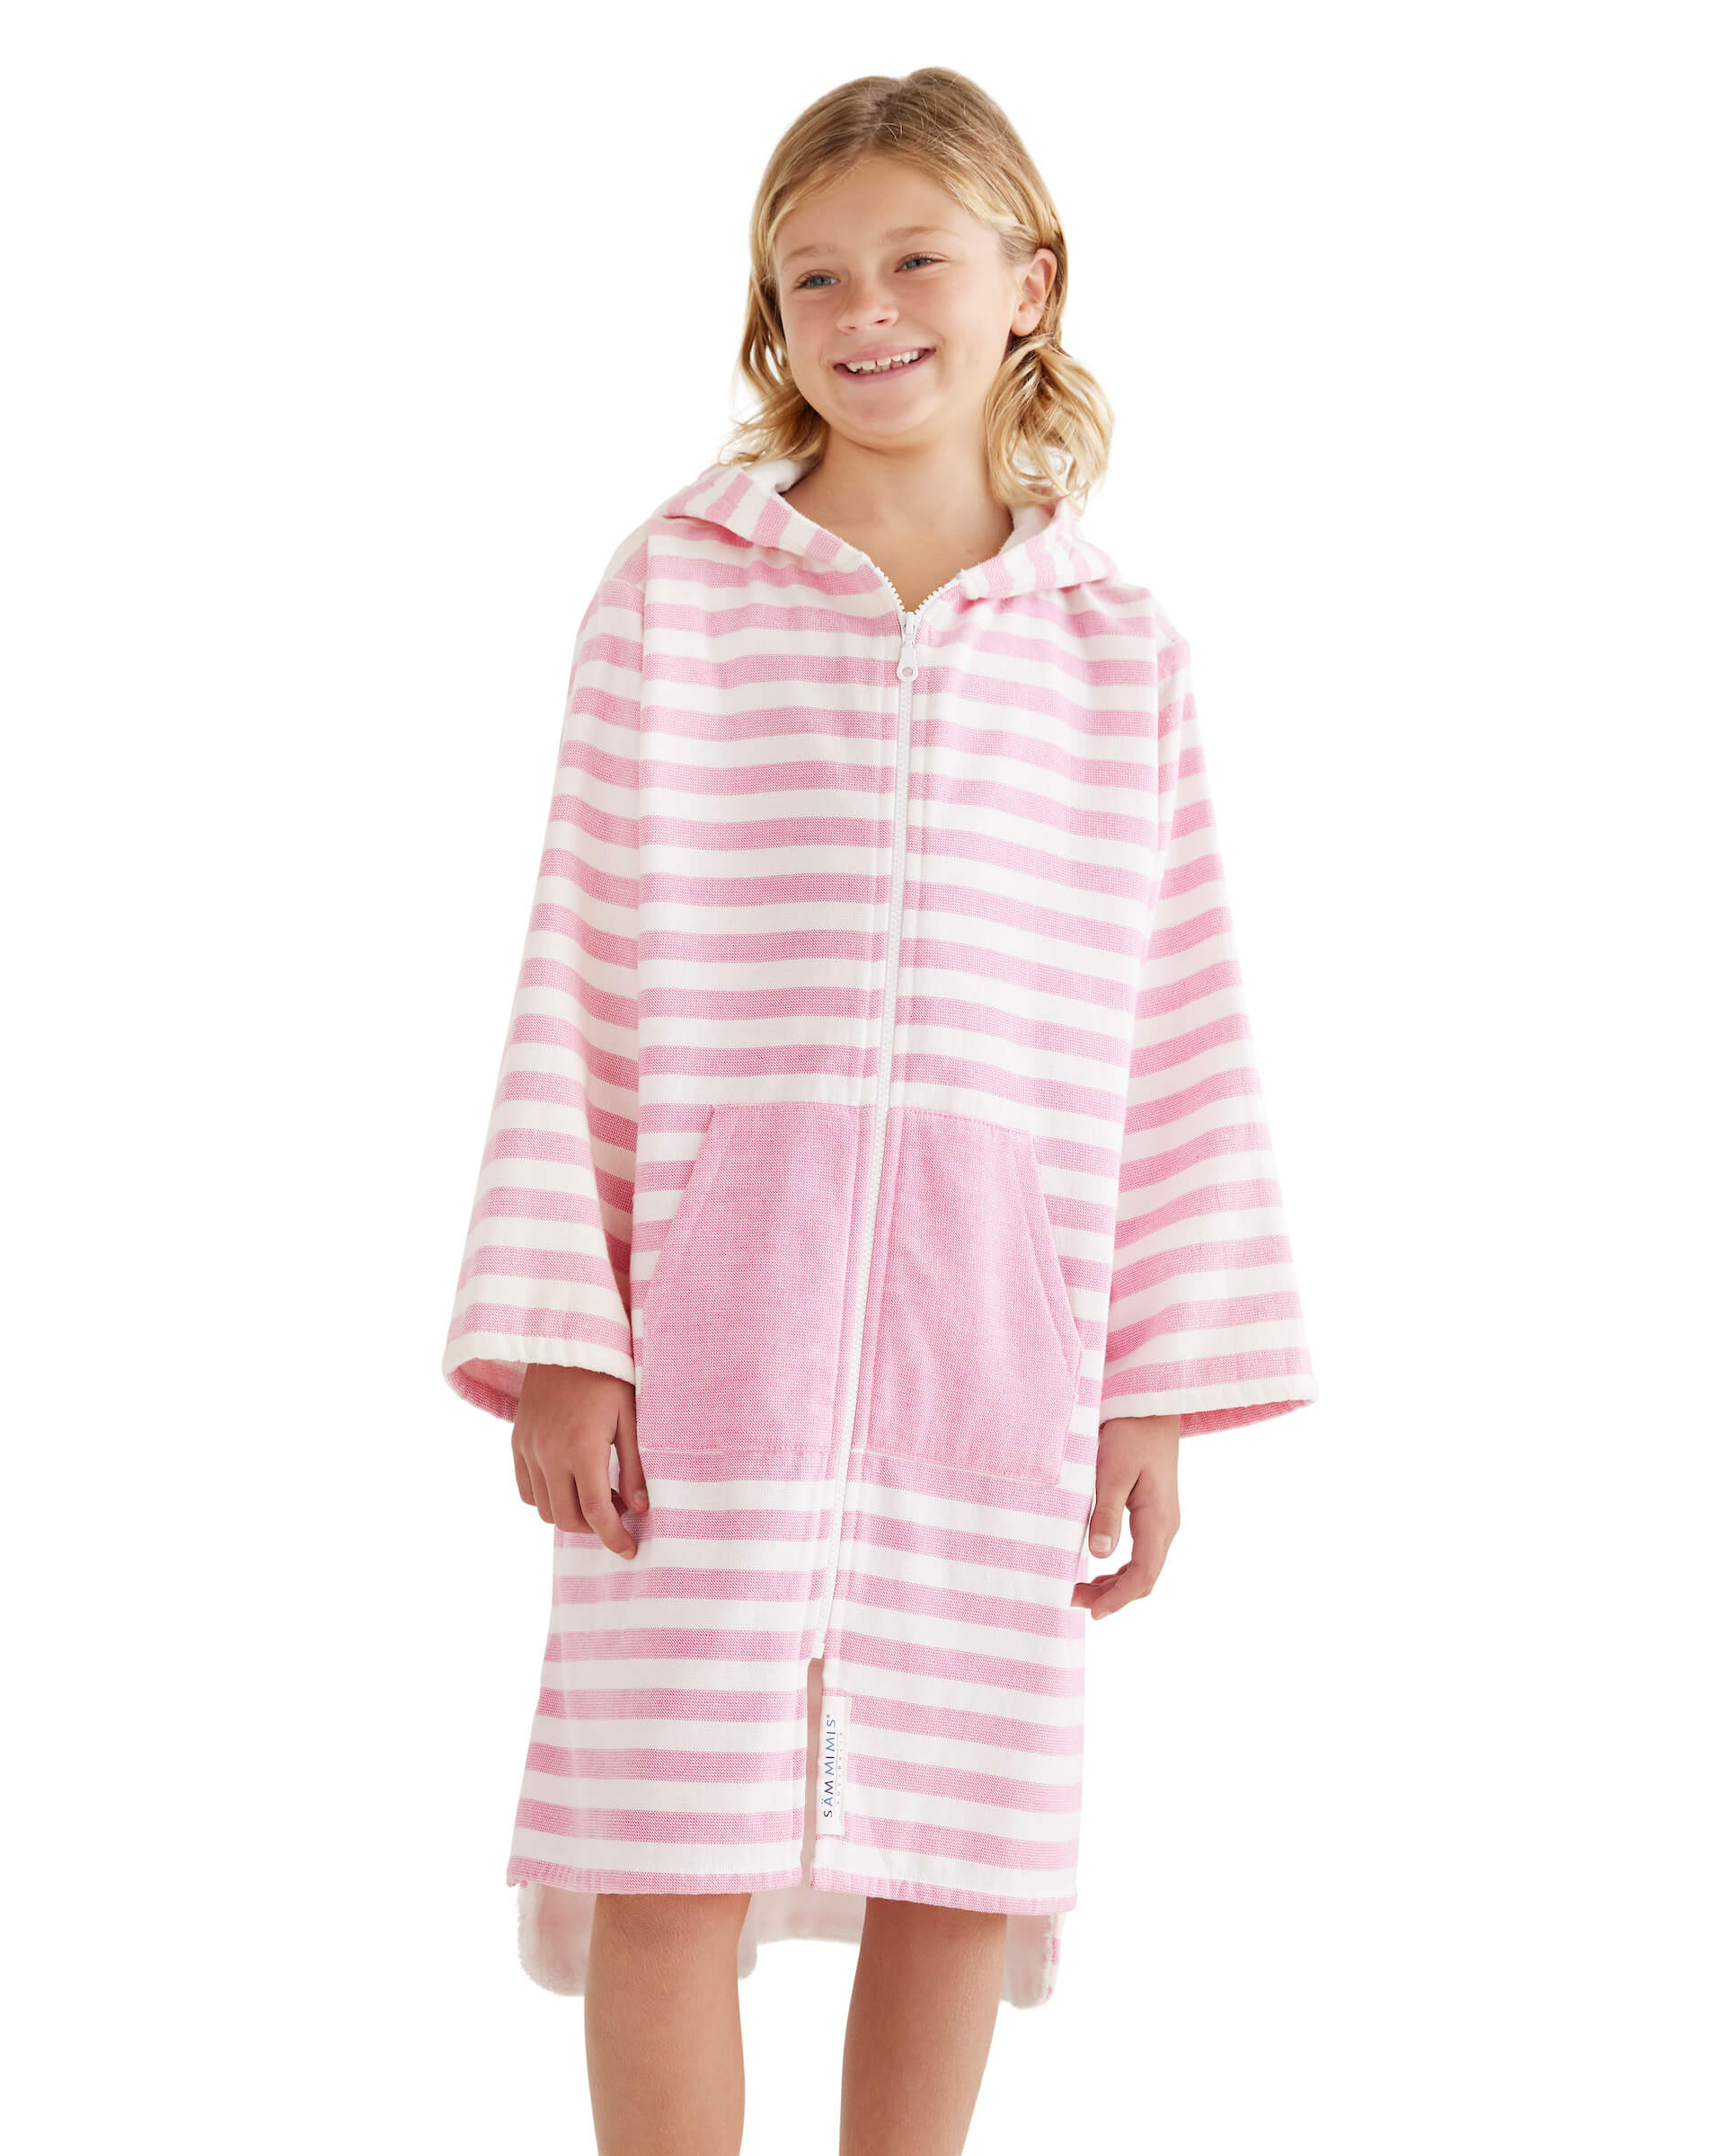 MENORCA Kids Terry Hooded Towel: Pink/White